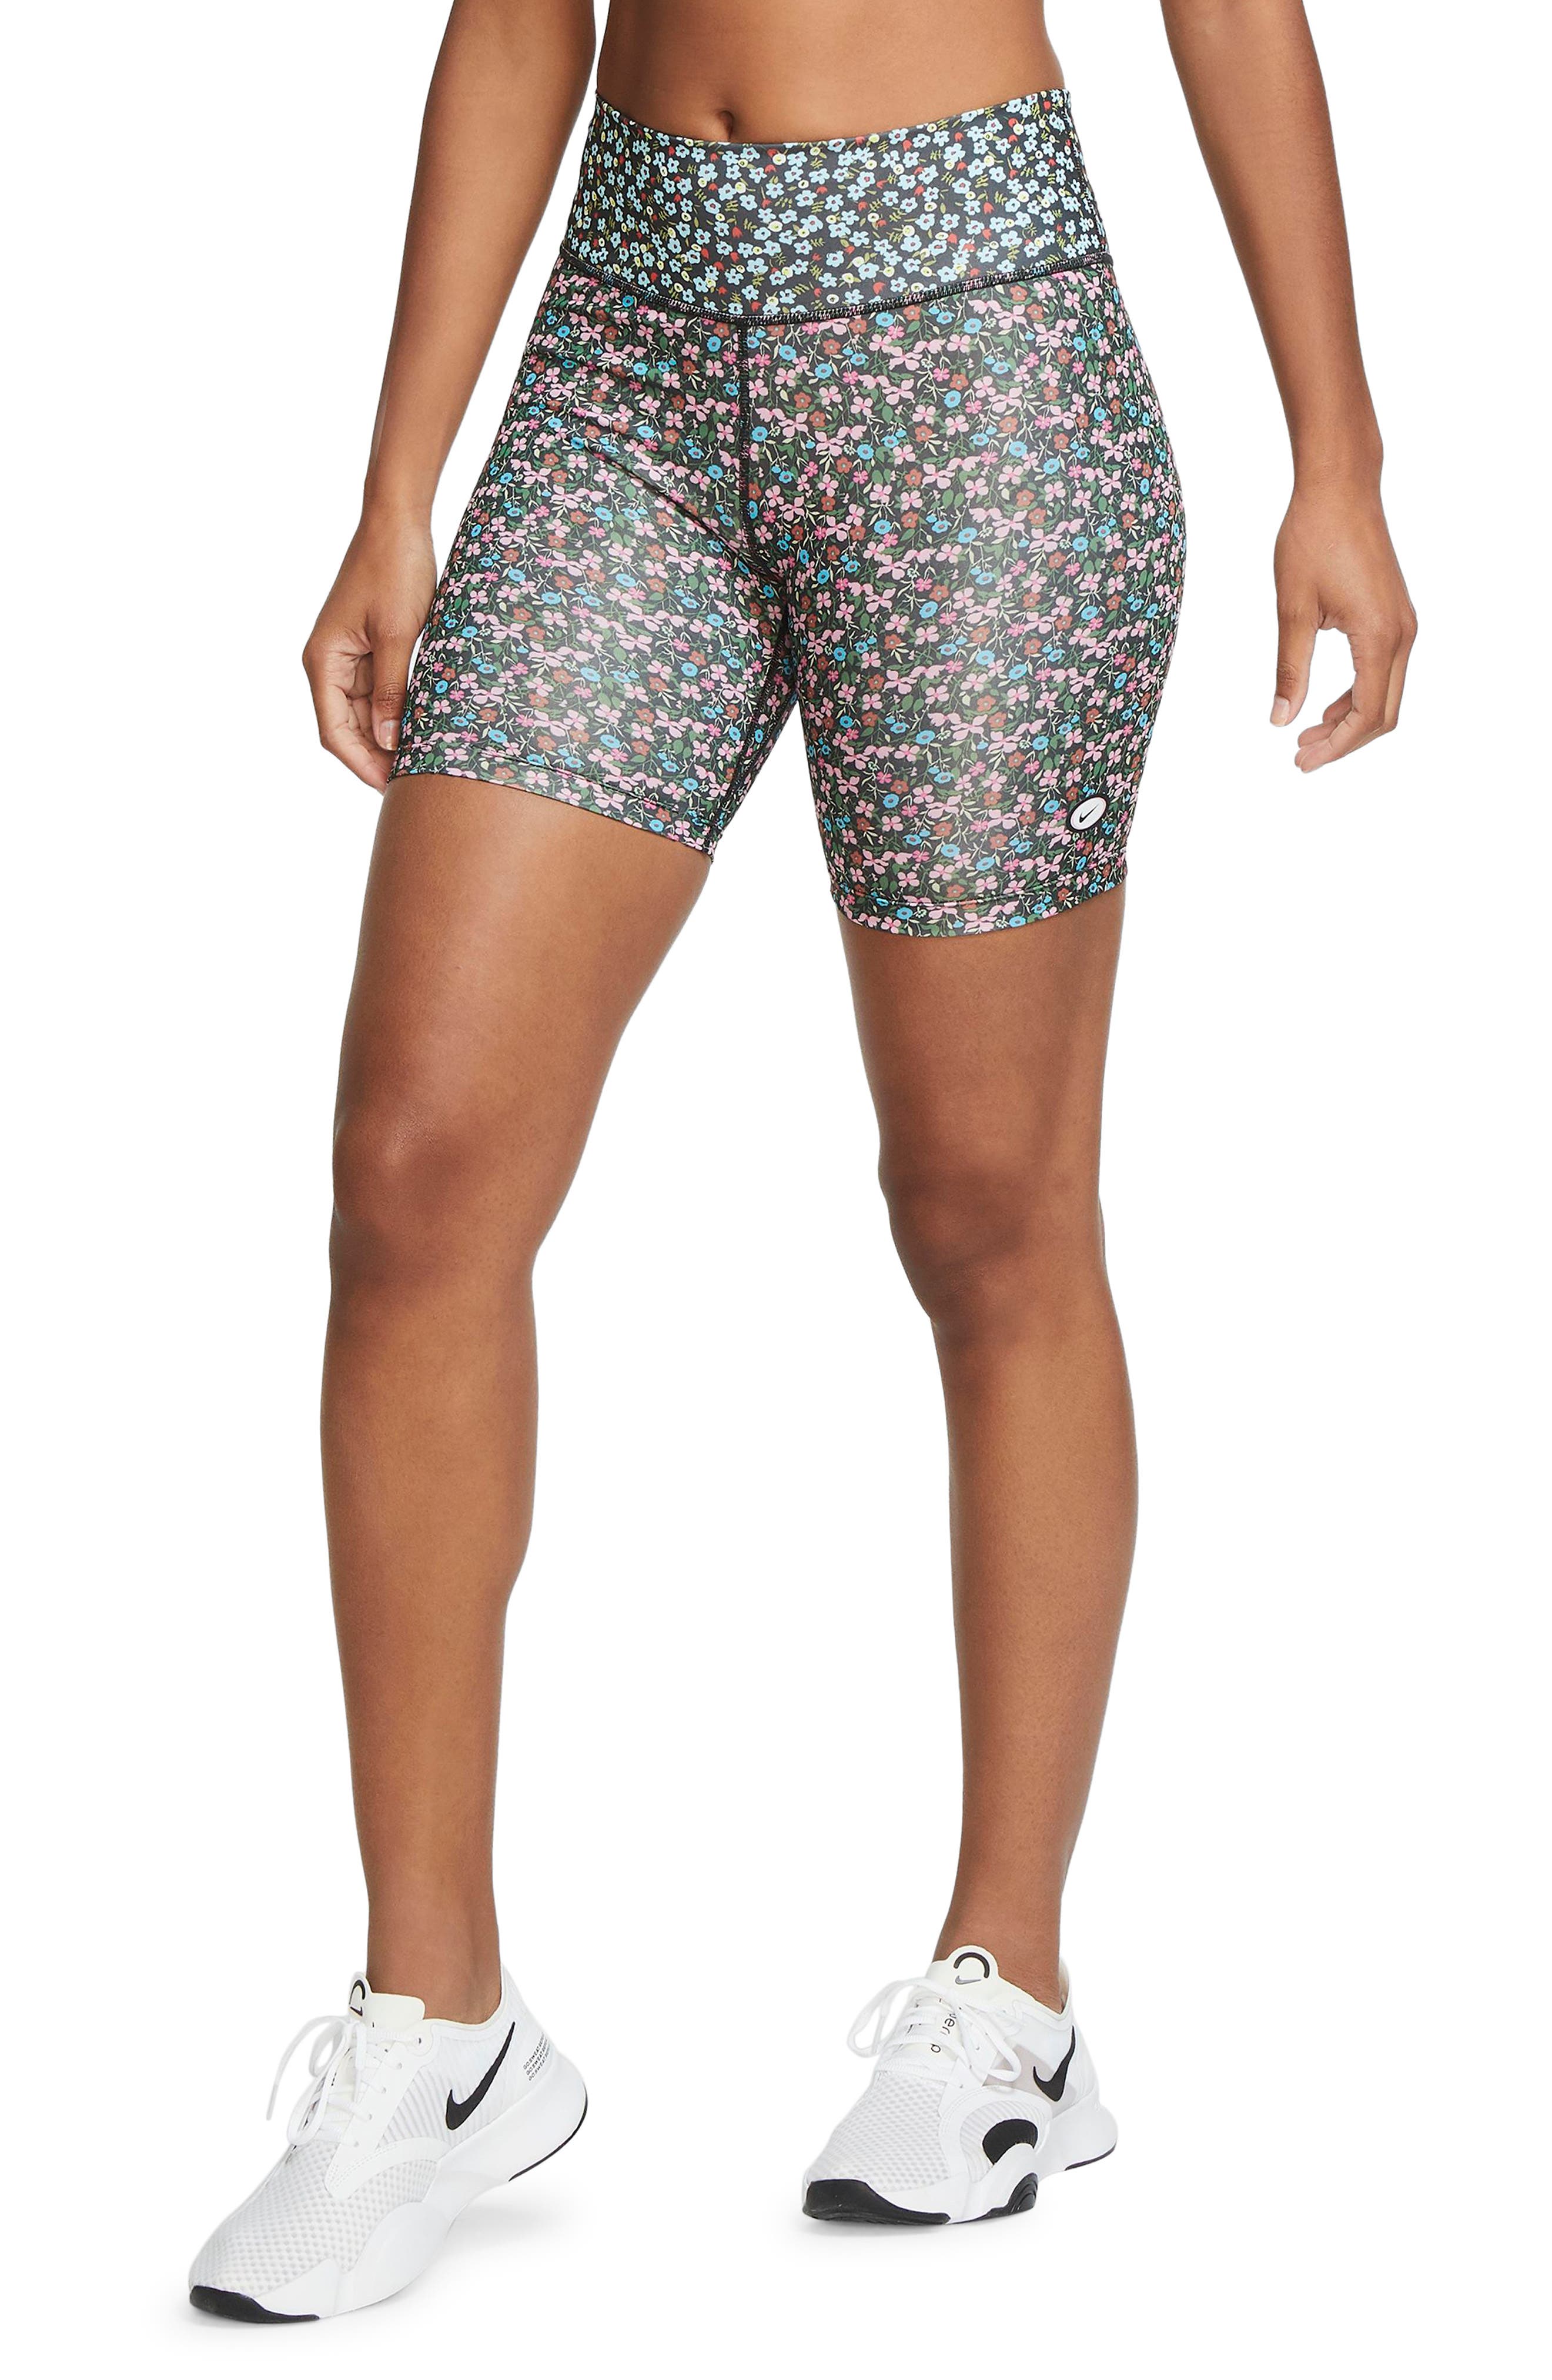 floral bike shorts